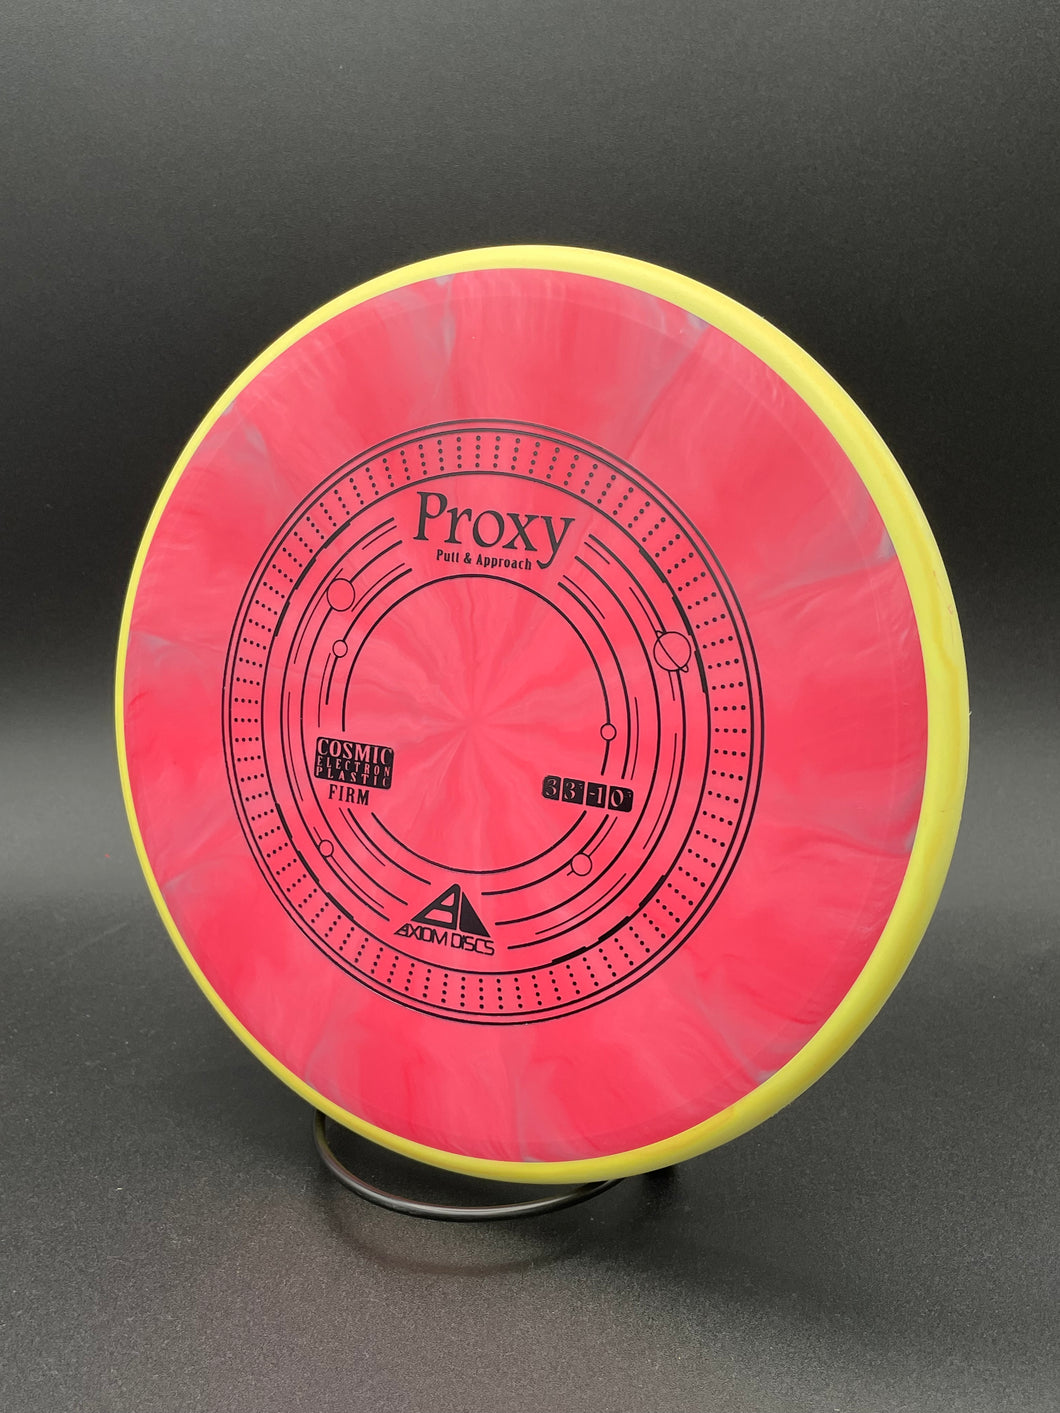 Proxy / Axiom Discs / Cosmic Electron Firm